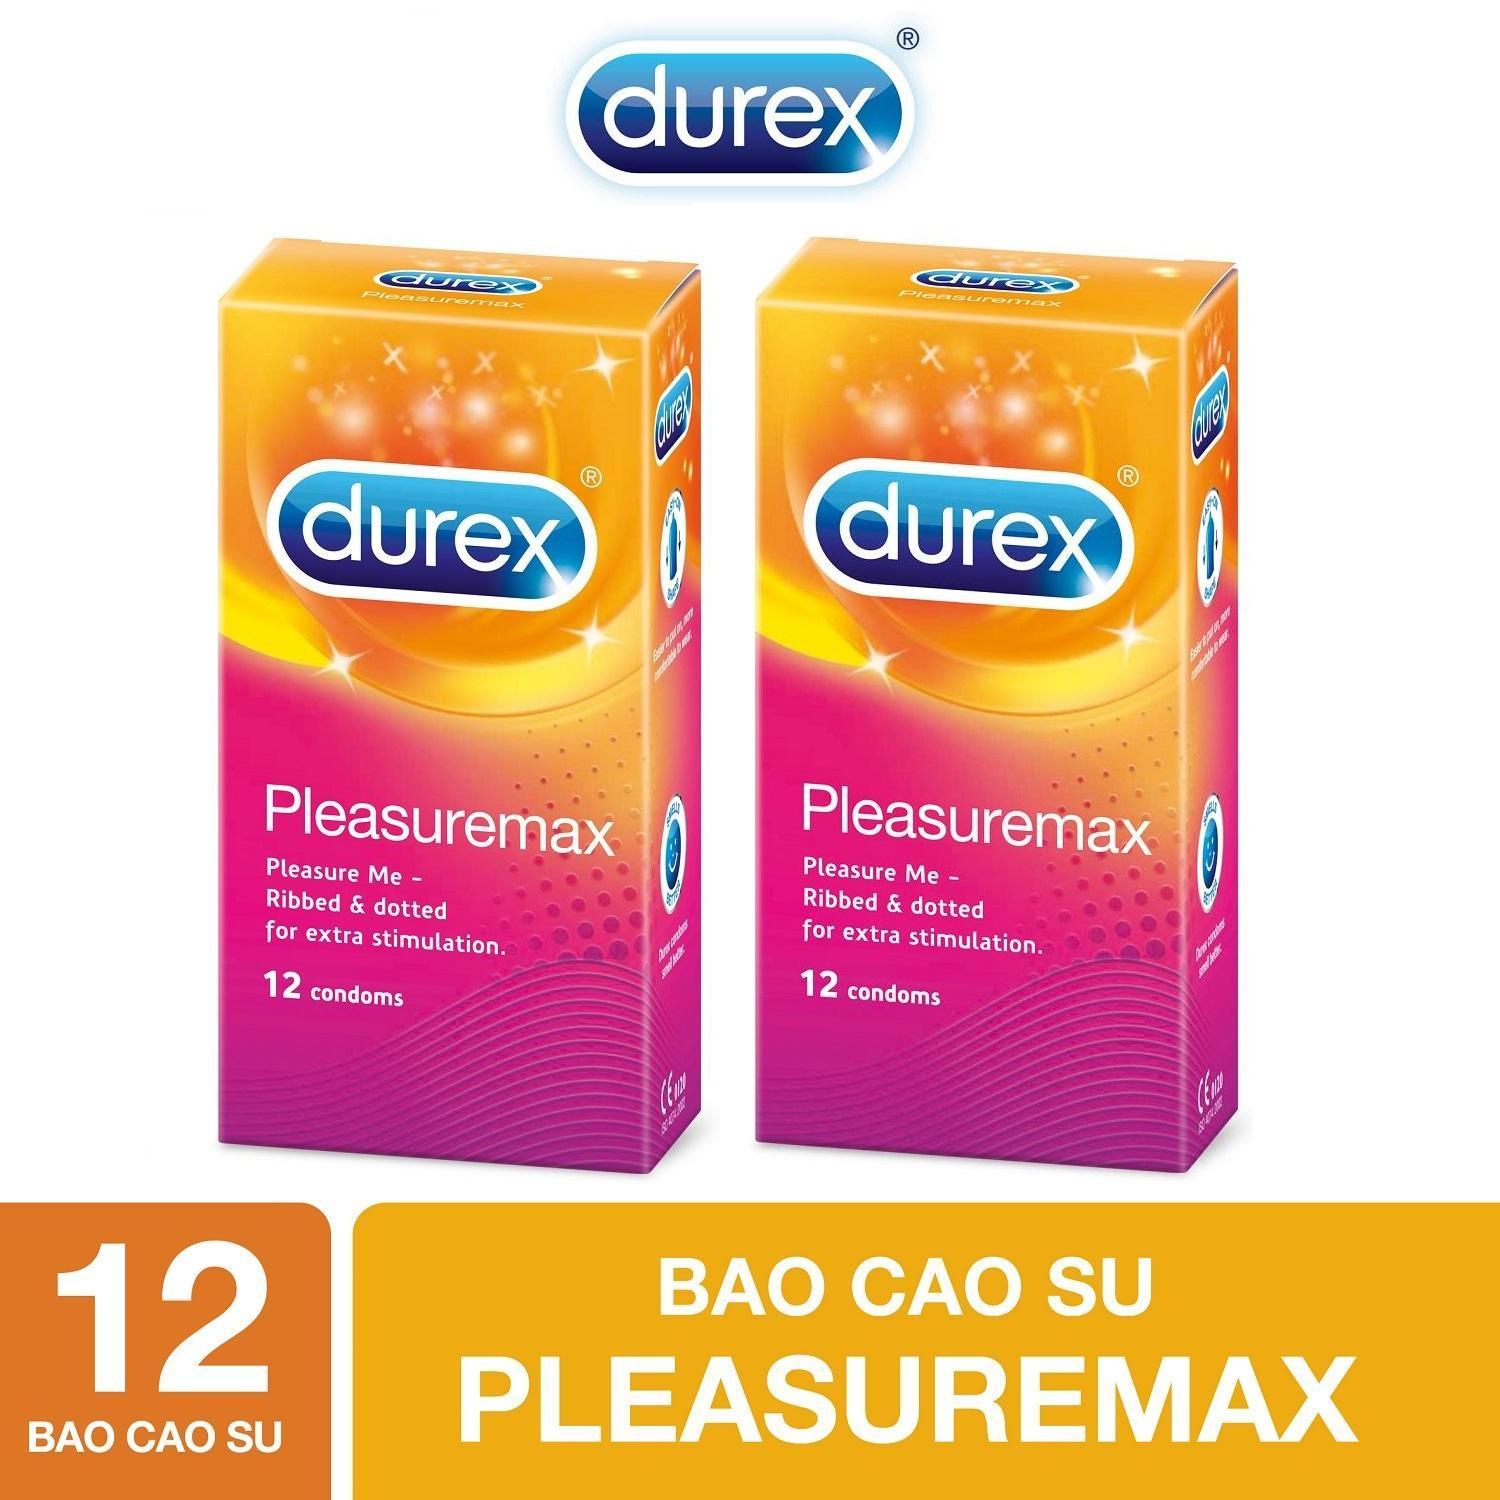 Bao Cao Su Durex Pleasuremax H3c